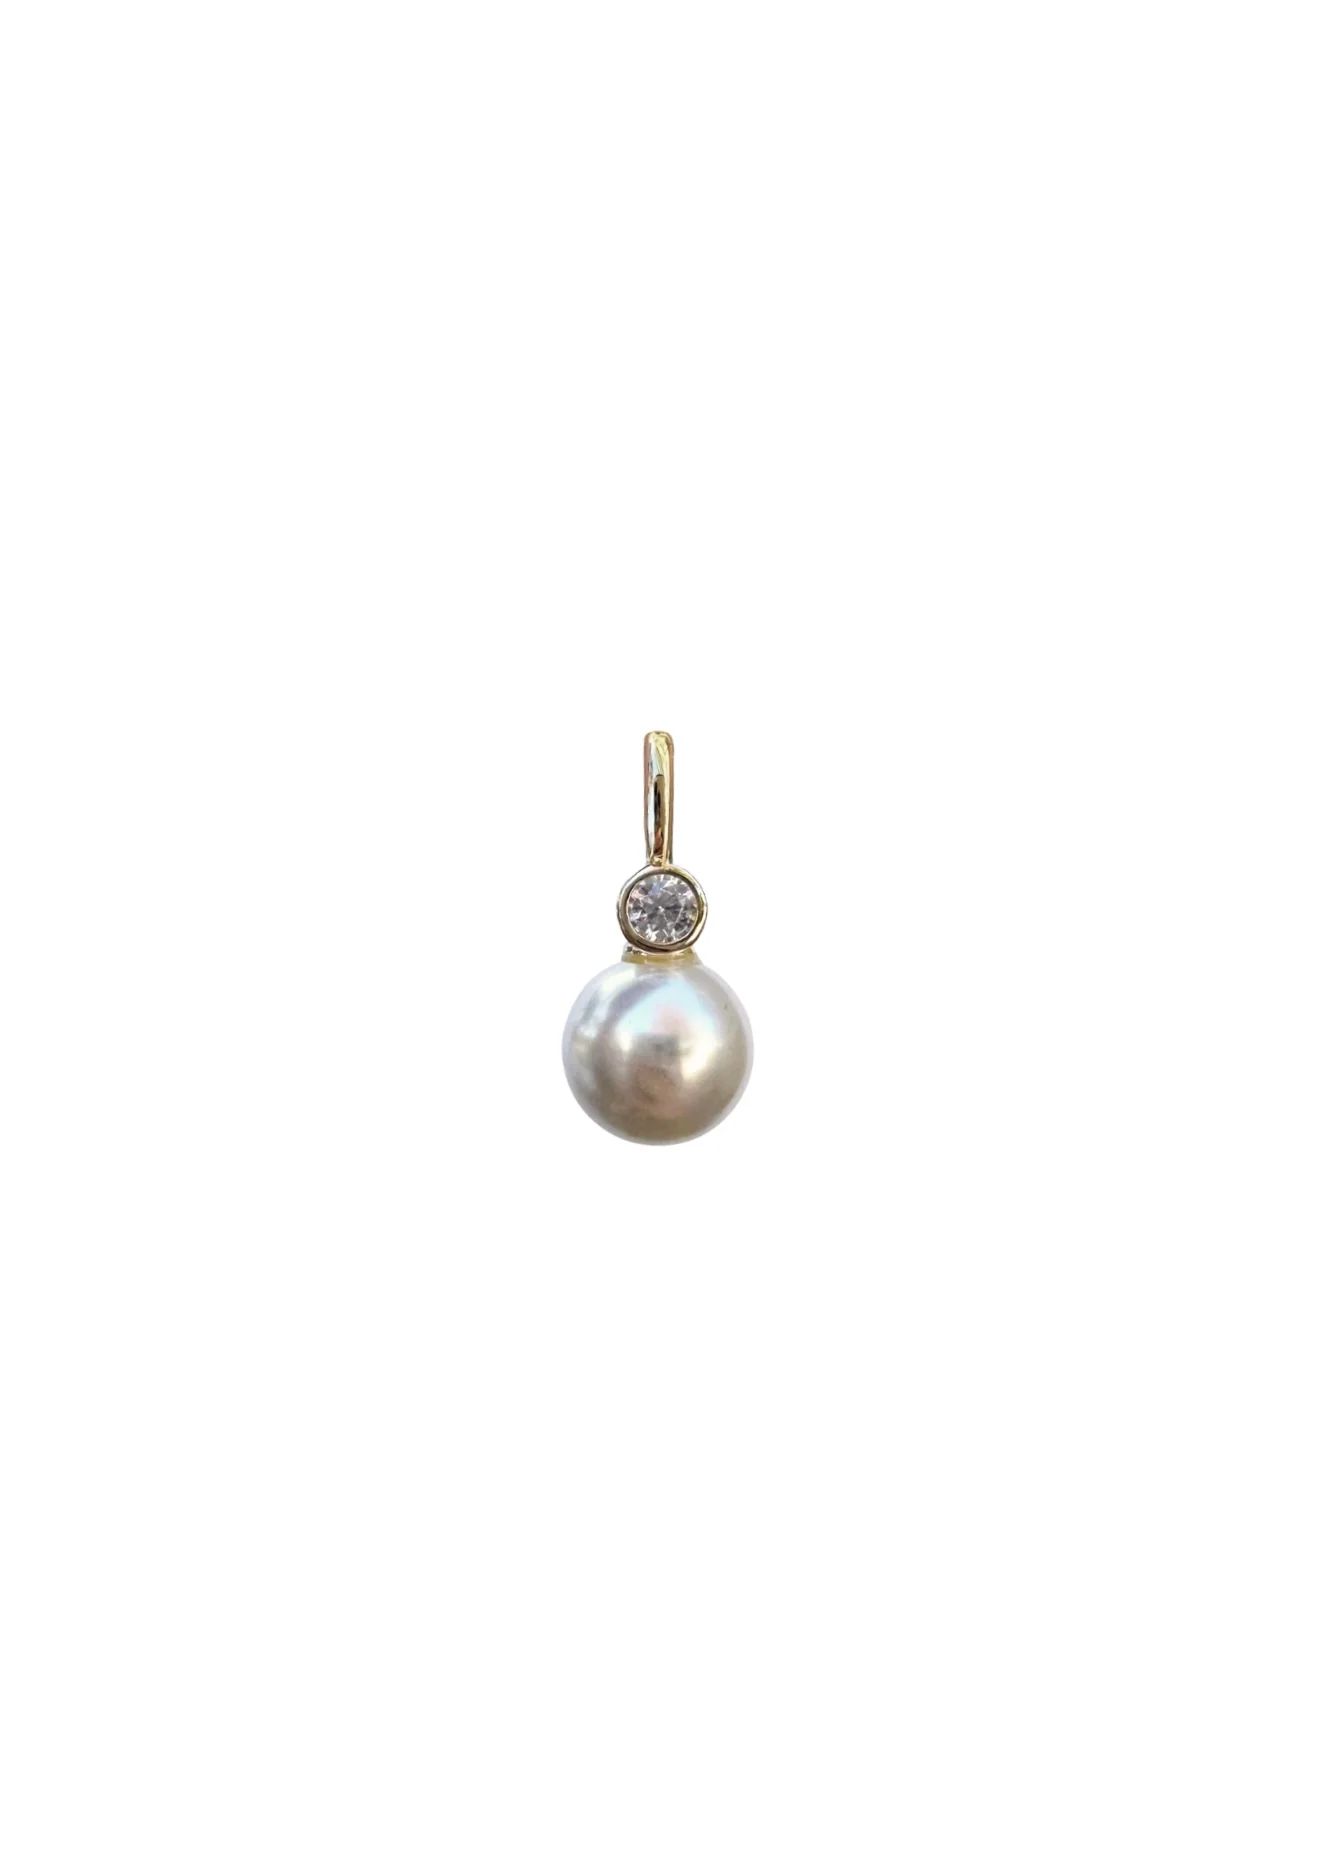 Petite Pearl Drop Charm | Nicola Bathie Jewelry